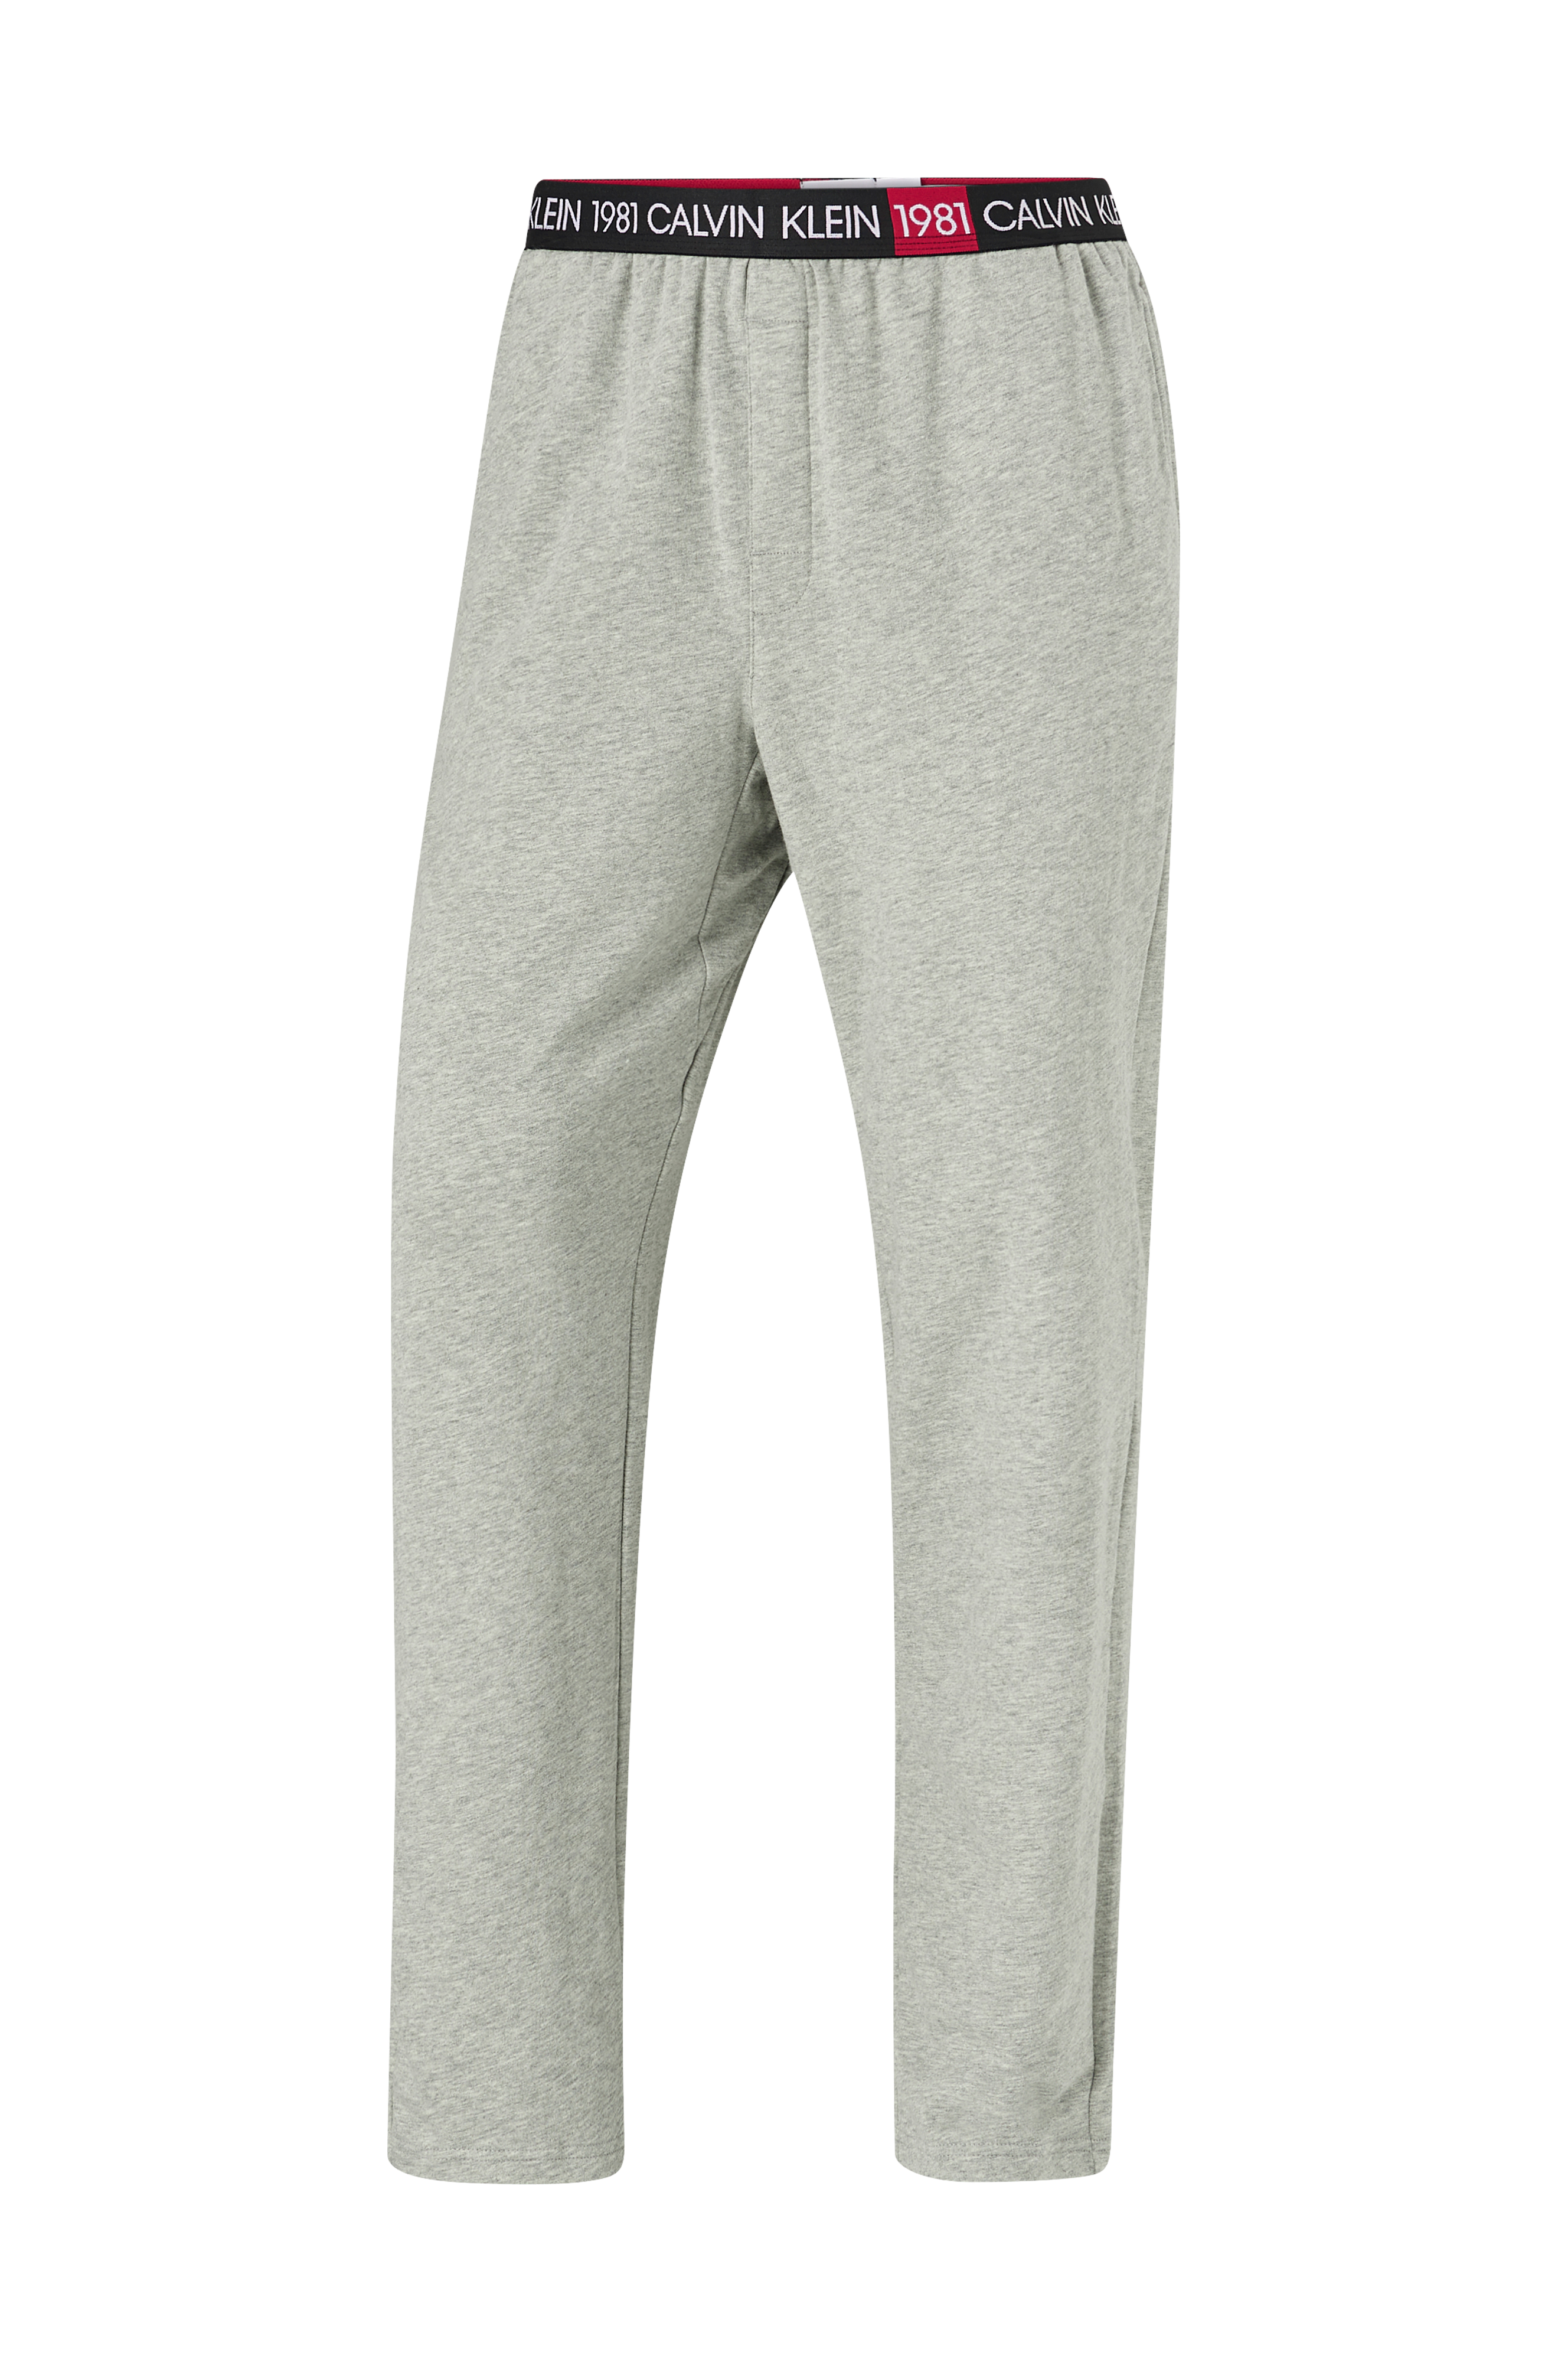 Calvin Klein Underwear Pyjamasbukser Sleep Pant - Grå - | Ellos.dk